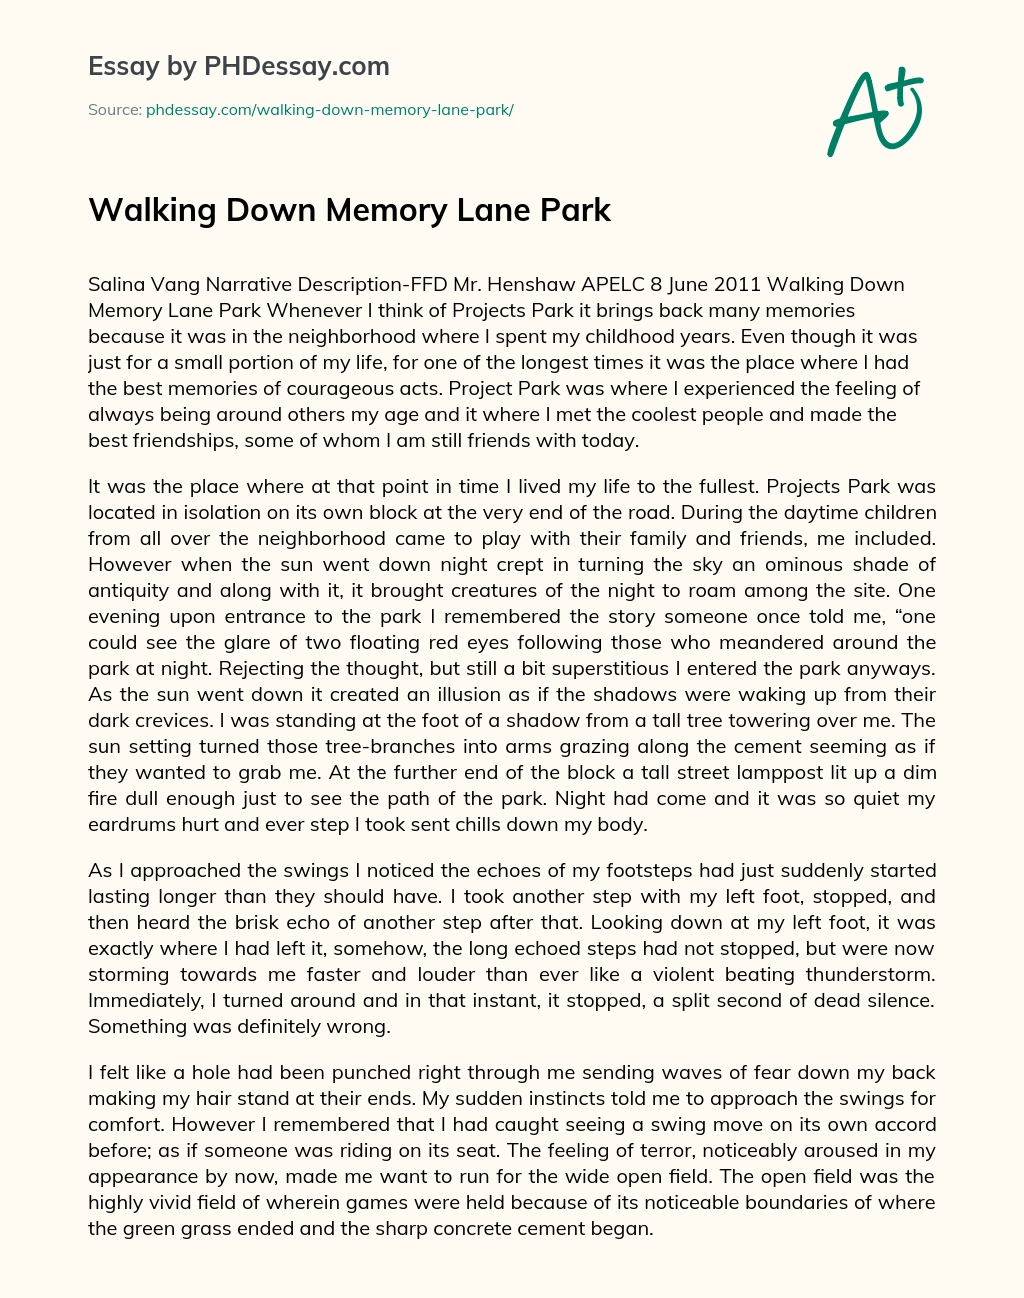 Walking Down Memory Lane Park essay